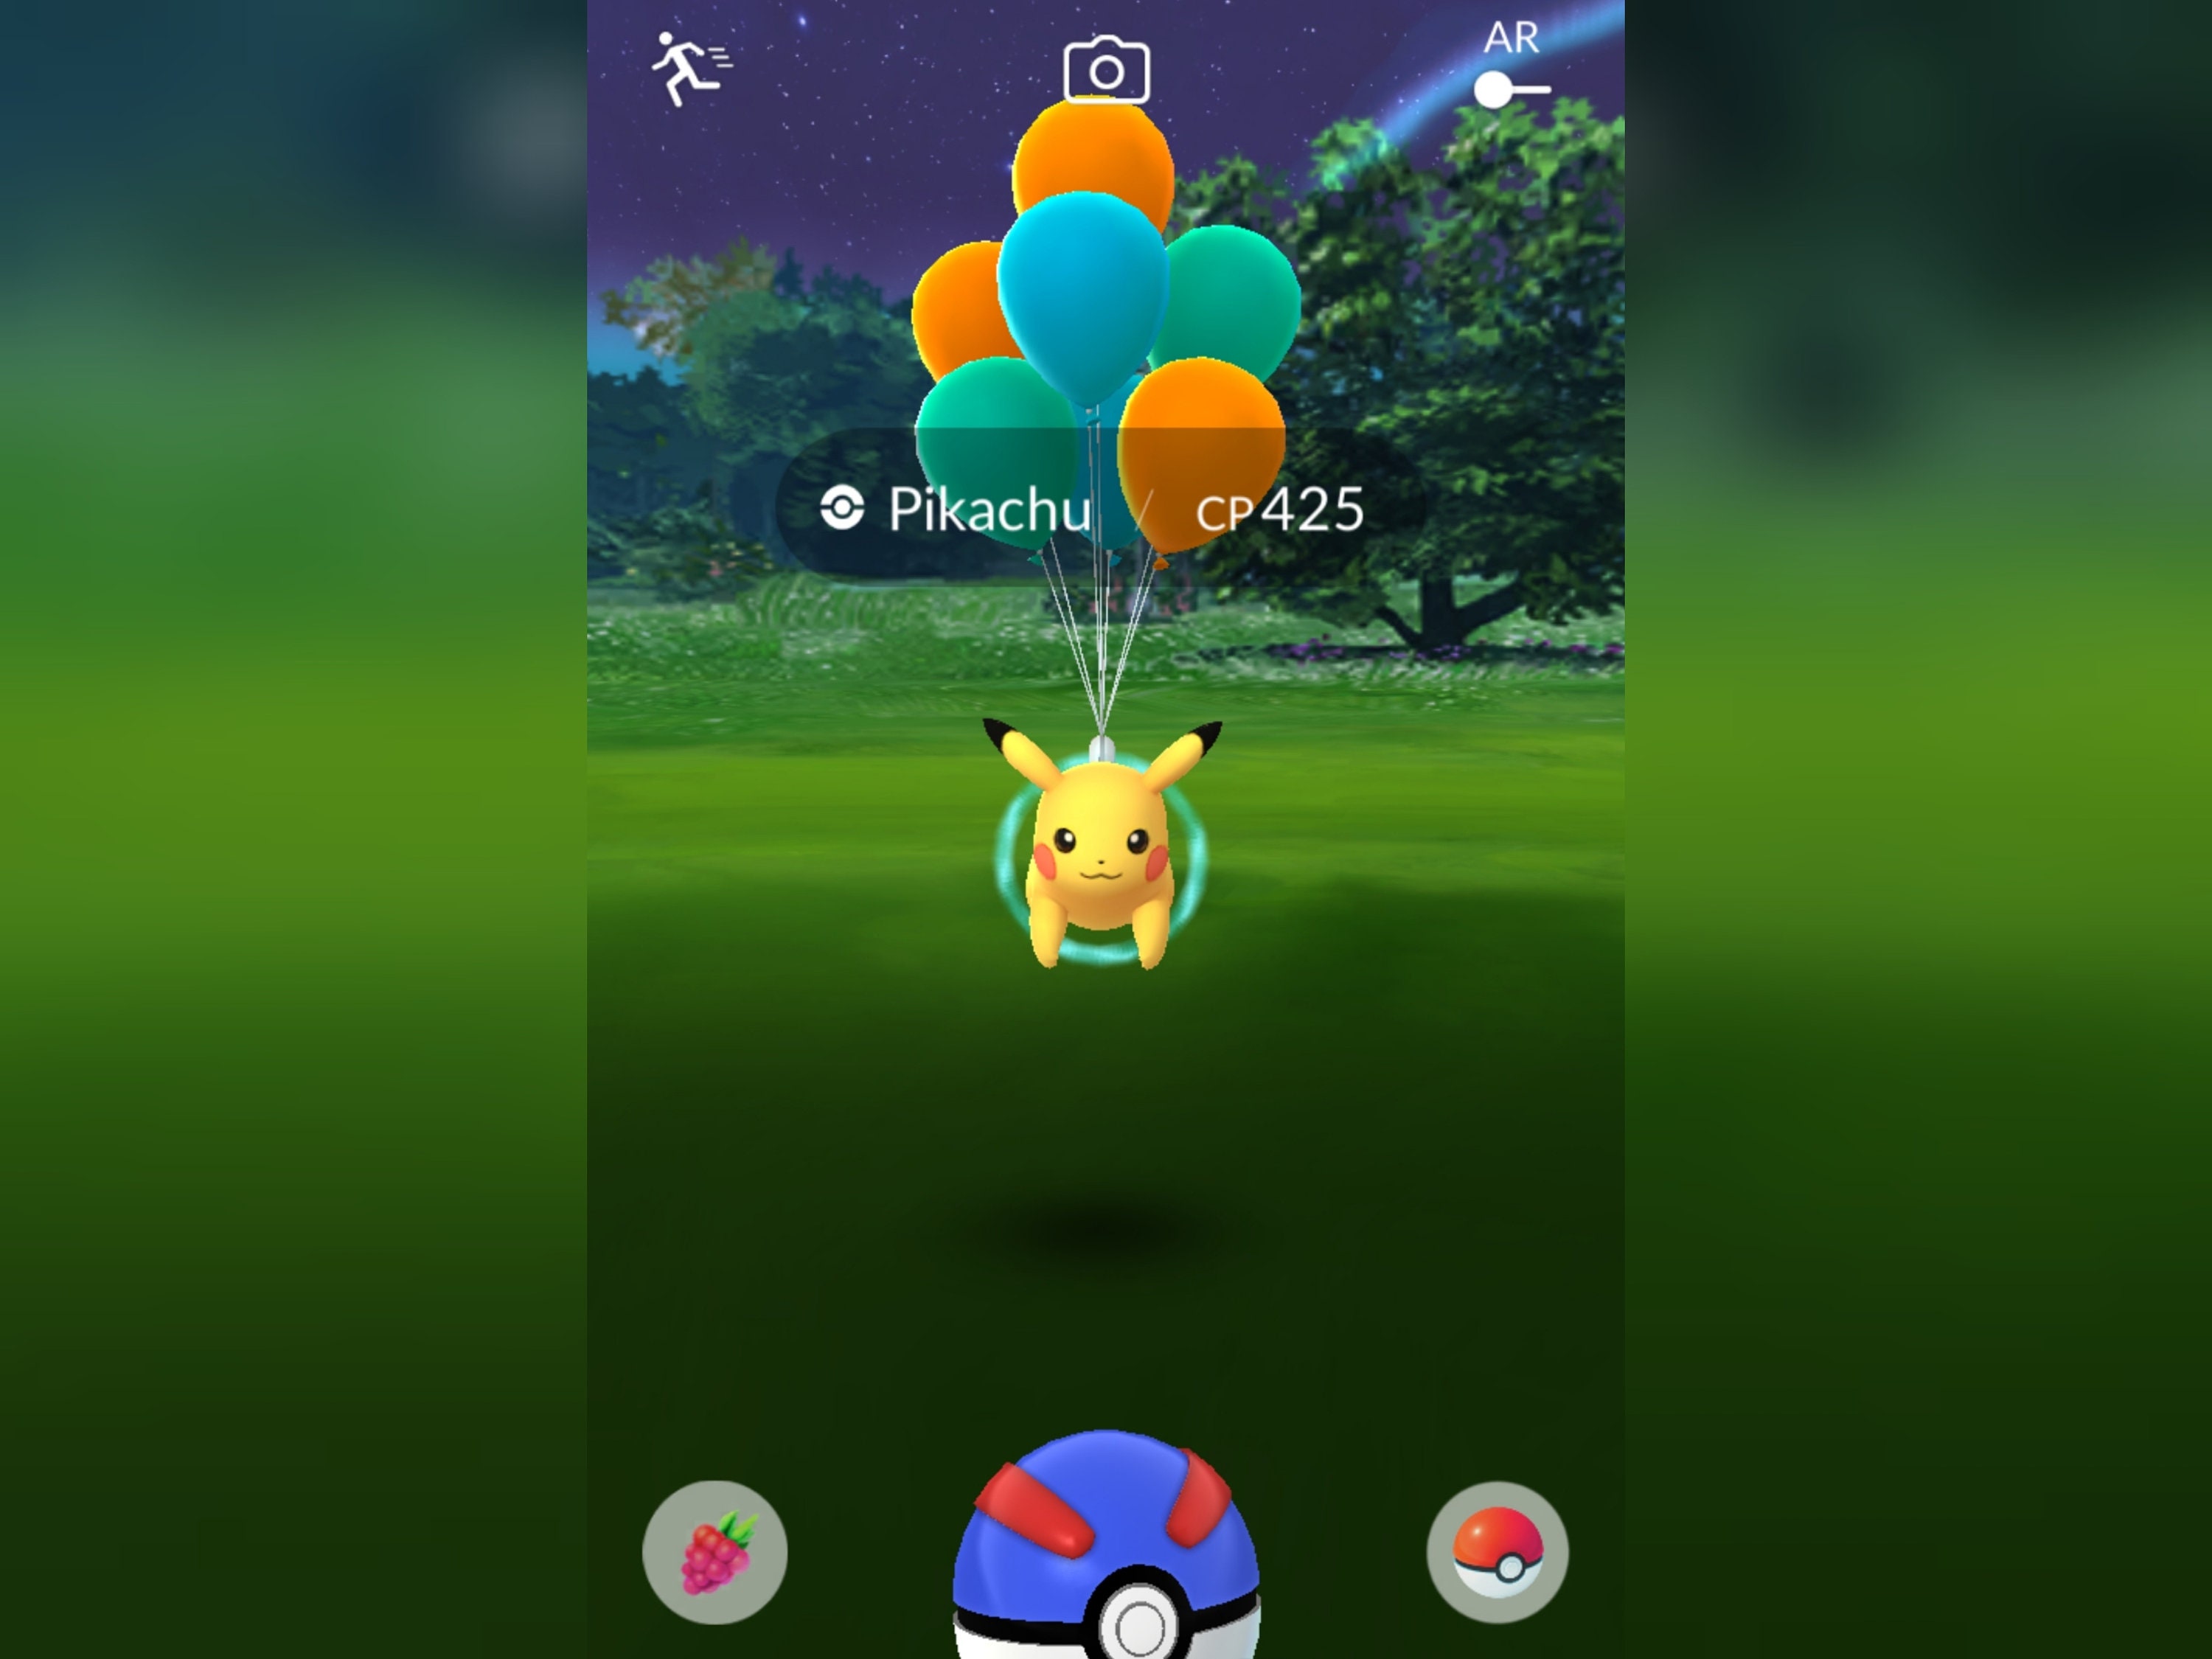 PokéMon Go Shiny Pikachu Flying With Green Balloons - trade 20k Stradust .